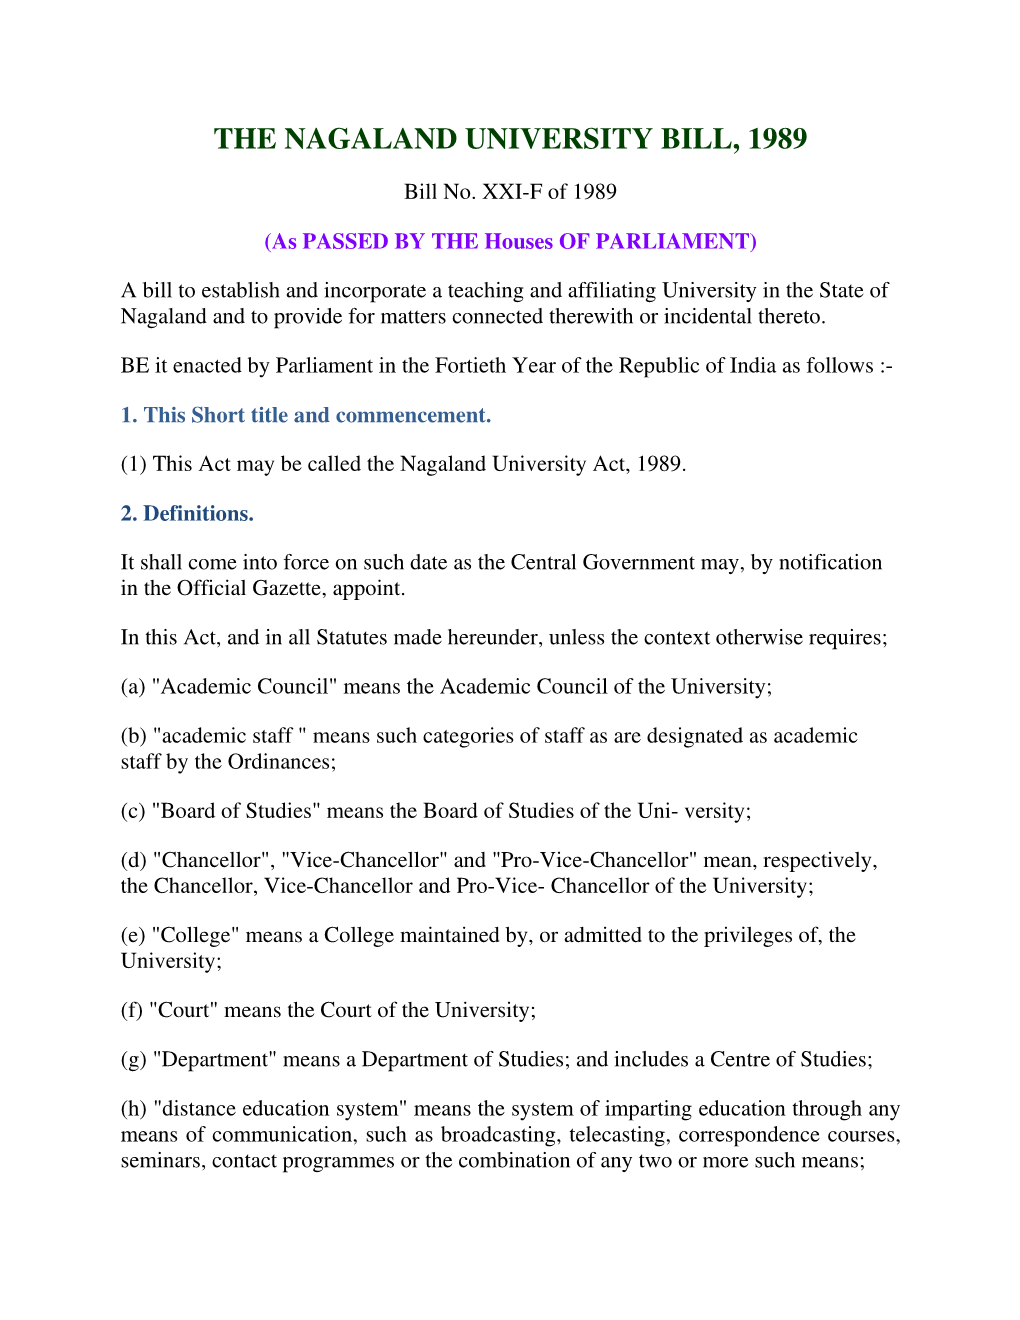 The Nagaland University Bill, 1989